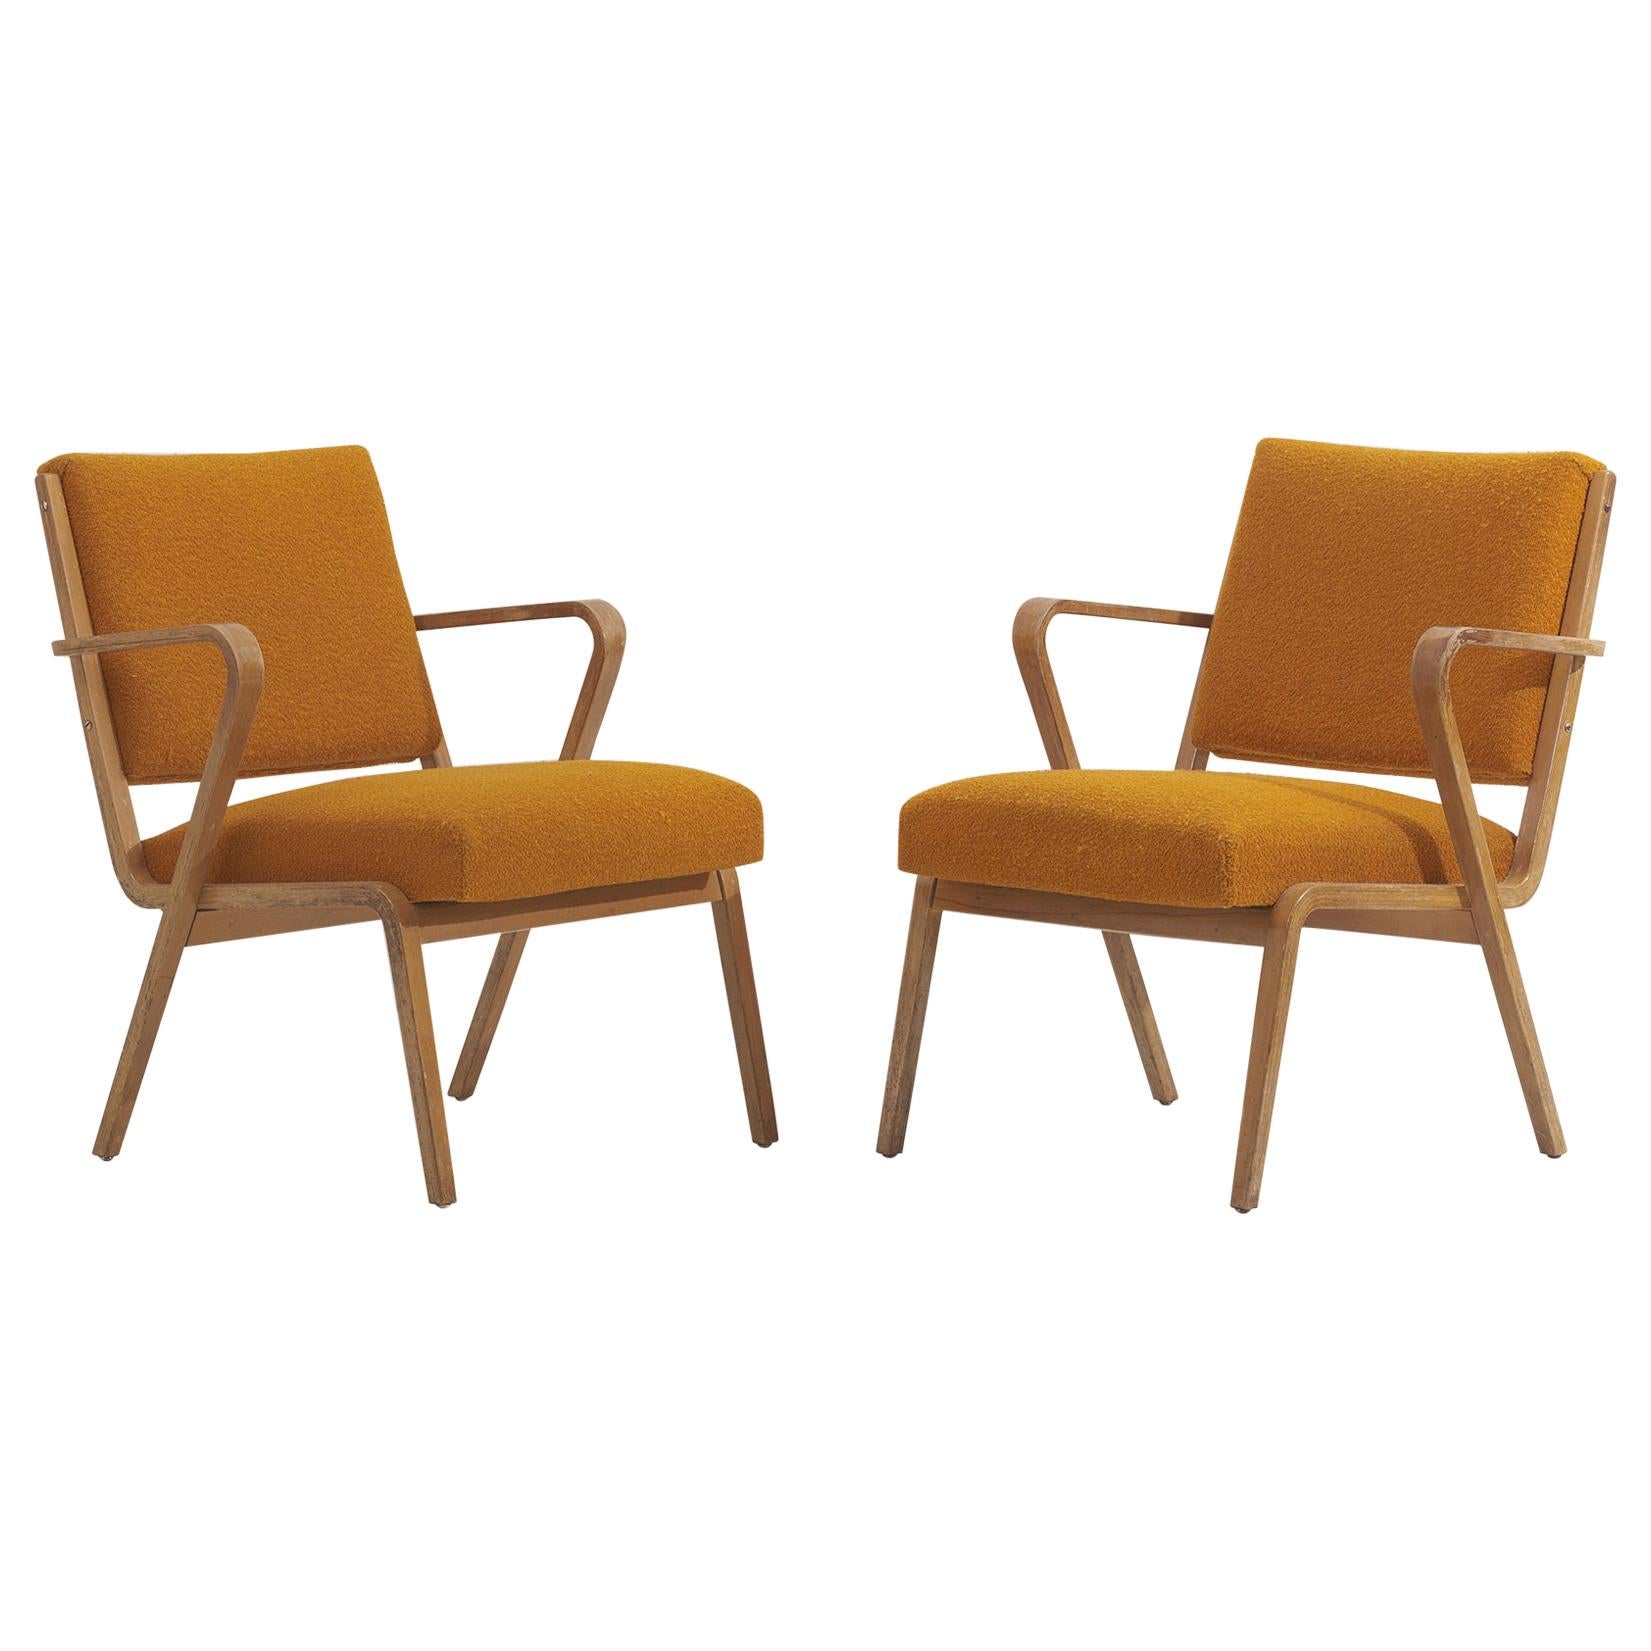 1950s Easy or Lounge Chair Set by Selman Selmanagic in mustard yellow